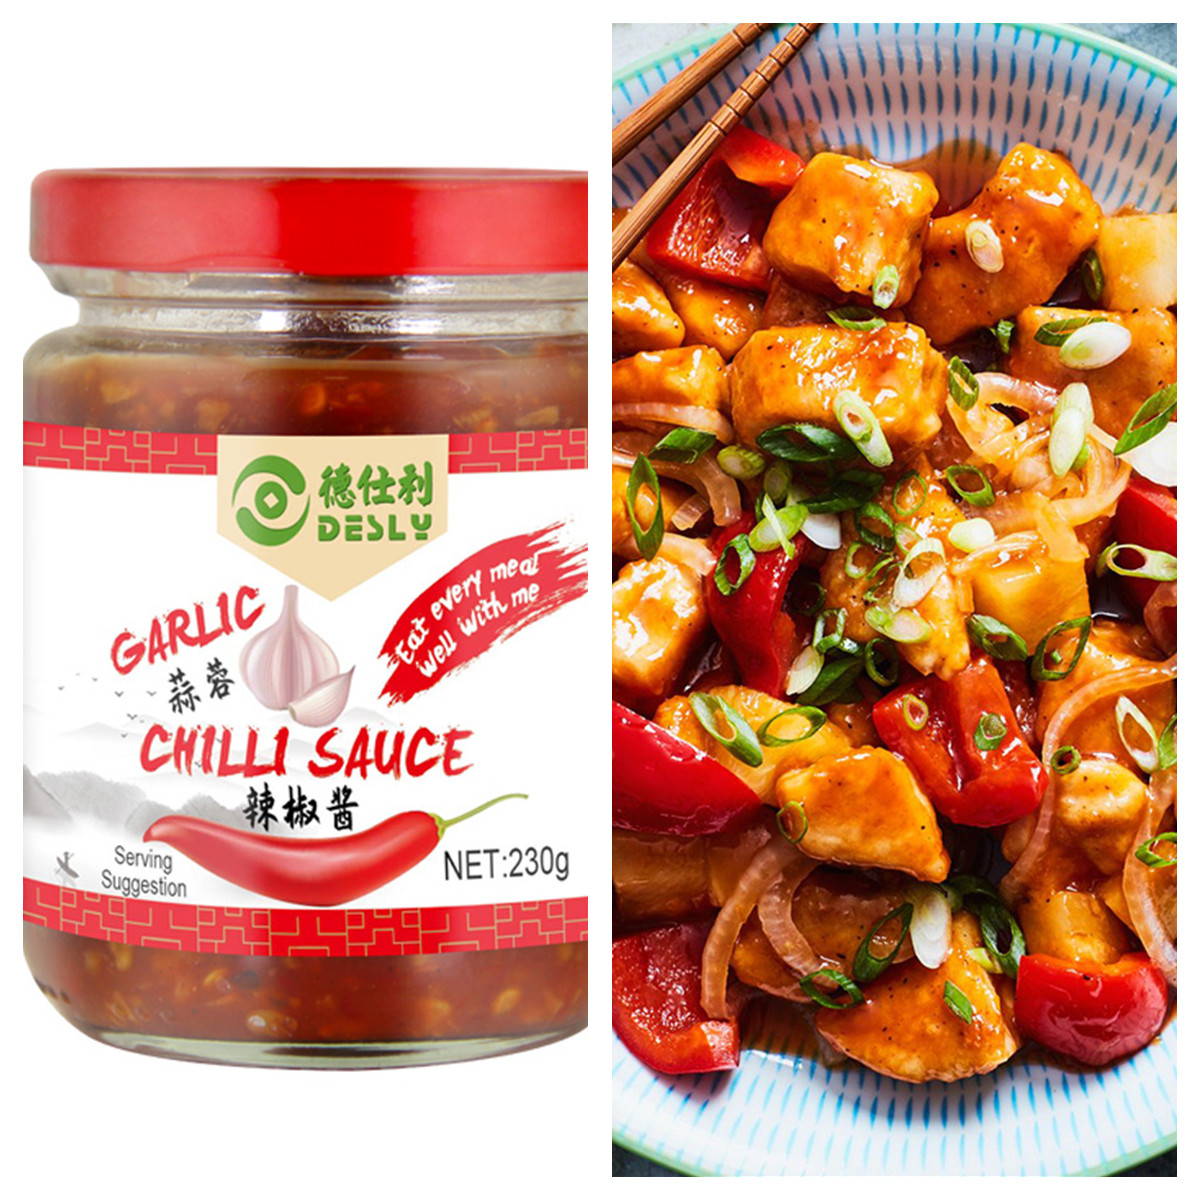 garlic chilli sauce_副本.jpg